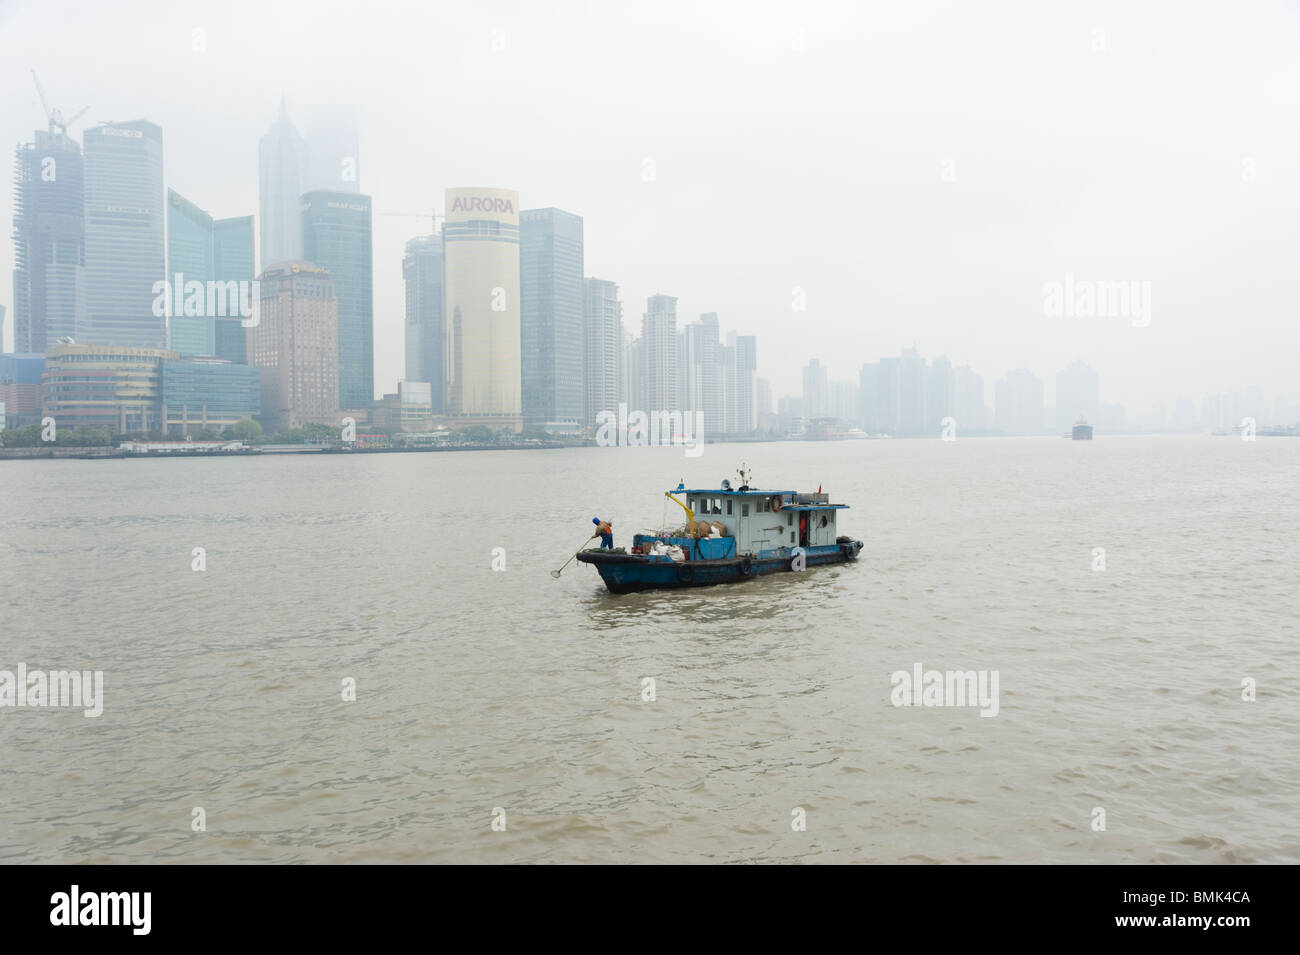 Piccola barca raccogliendo rifiuti sul fiume Huangpu, Shanghai, Cina Foto Stock